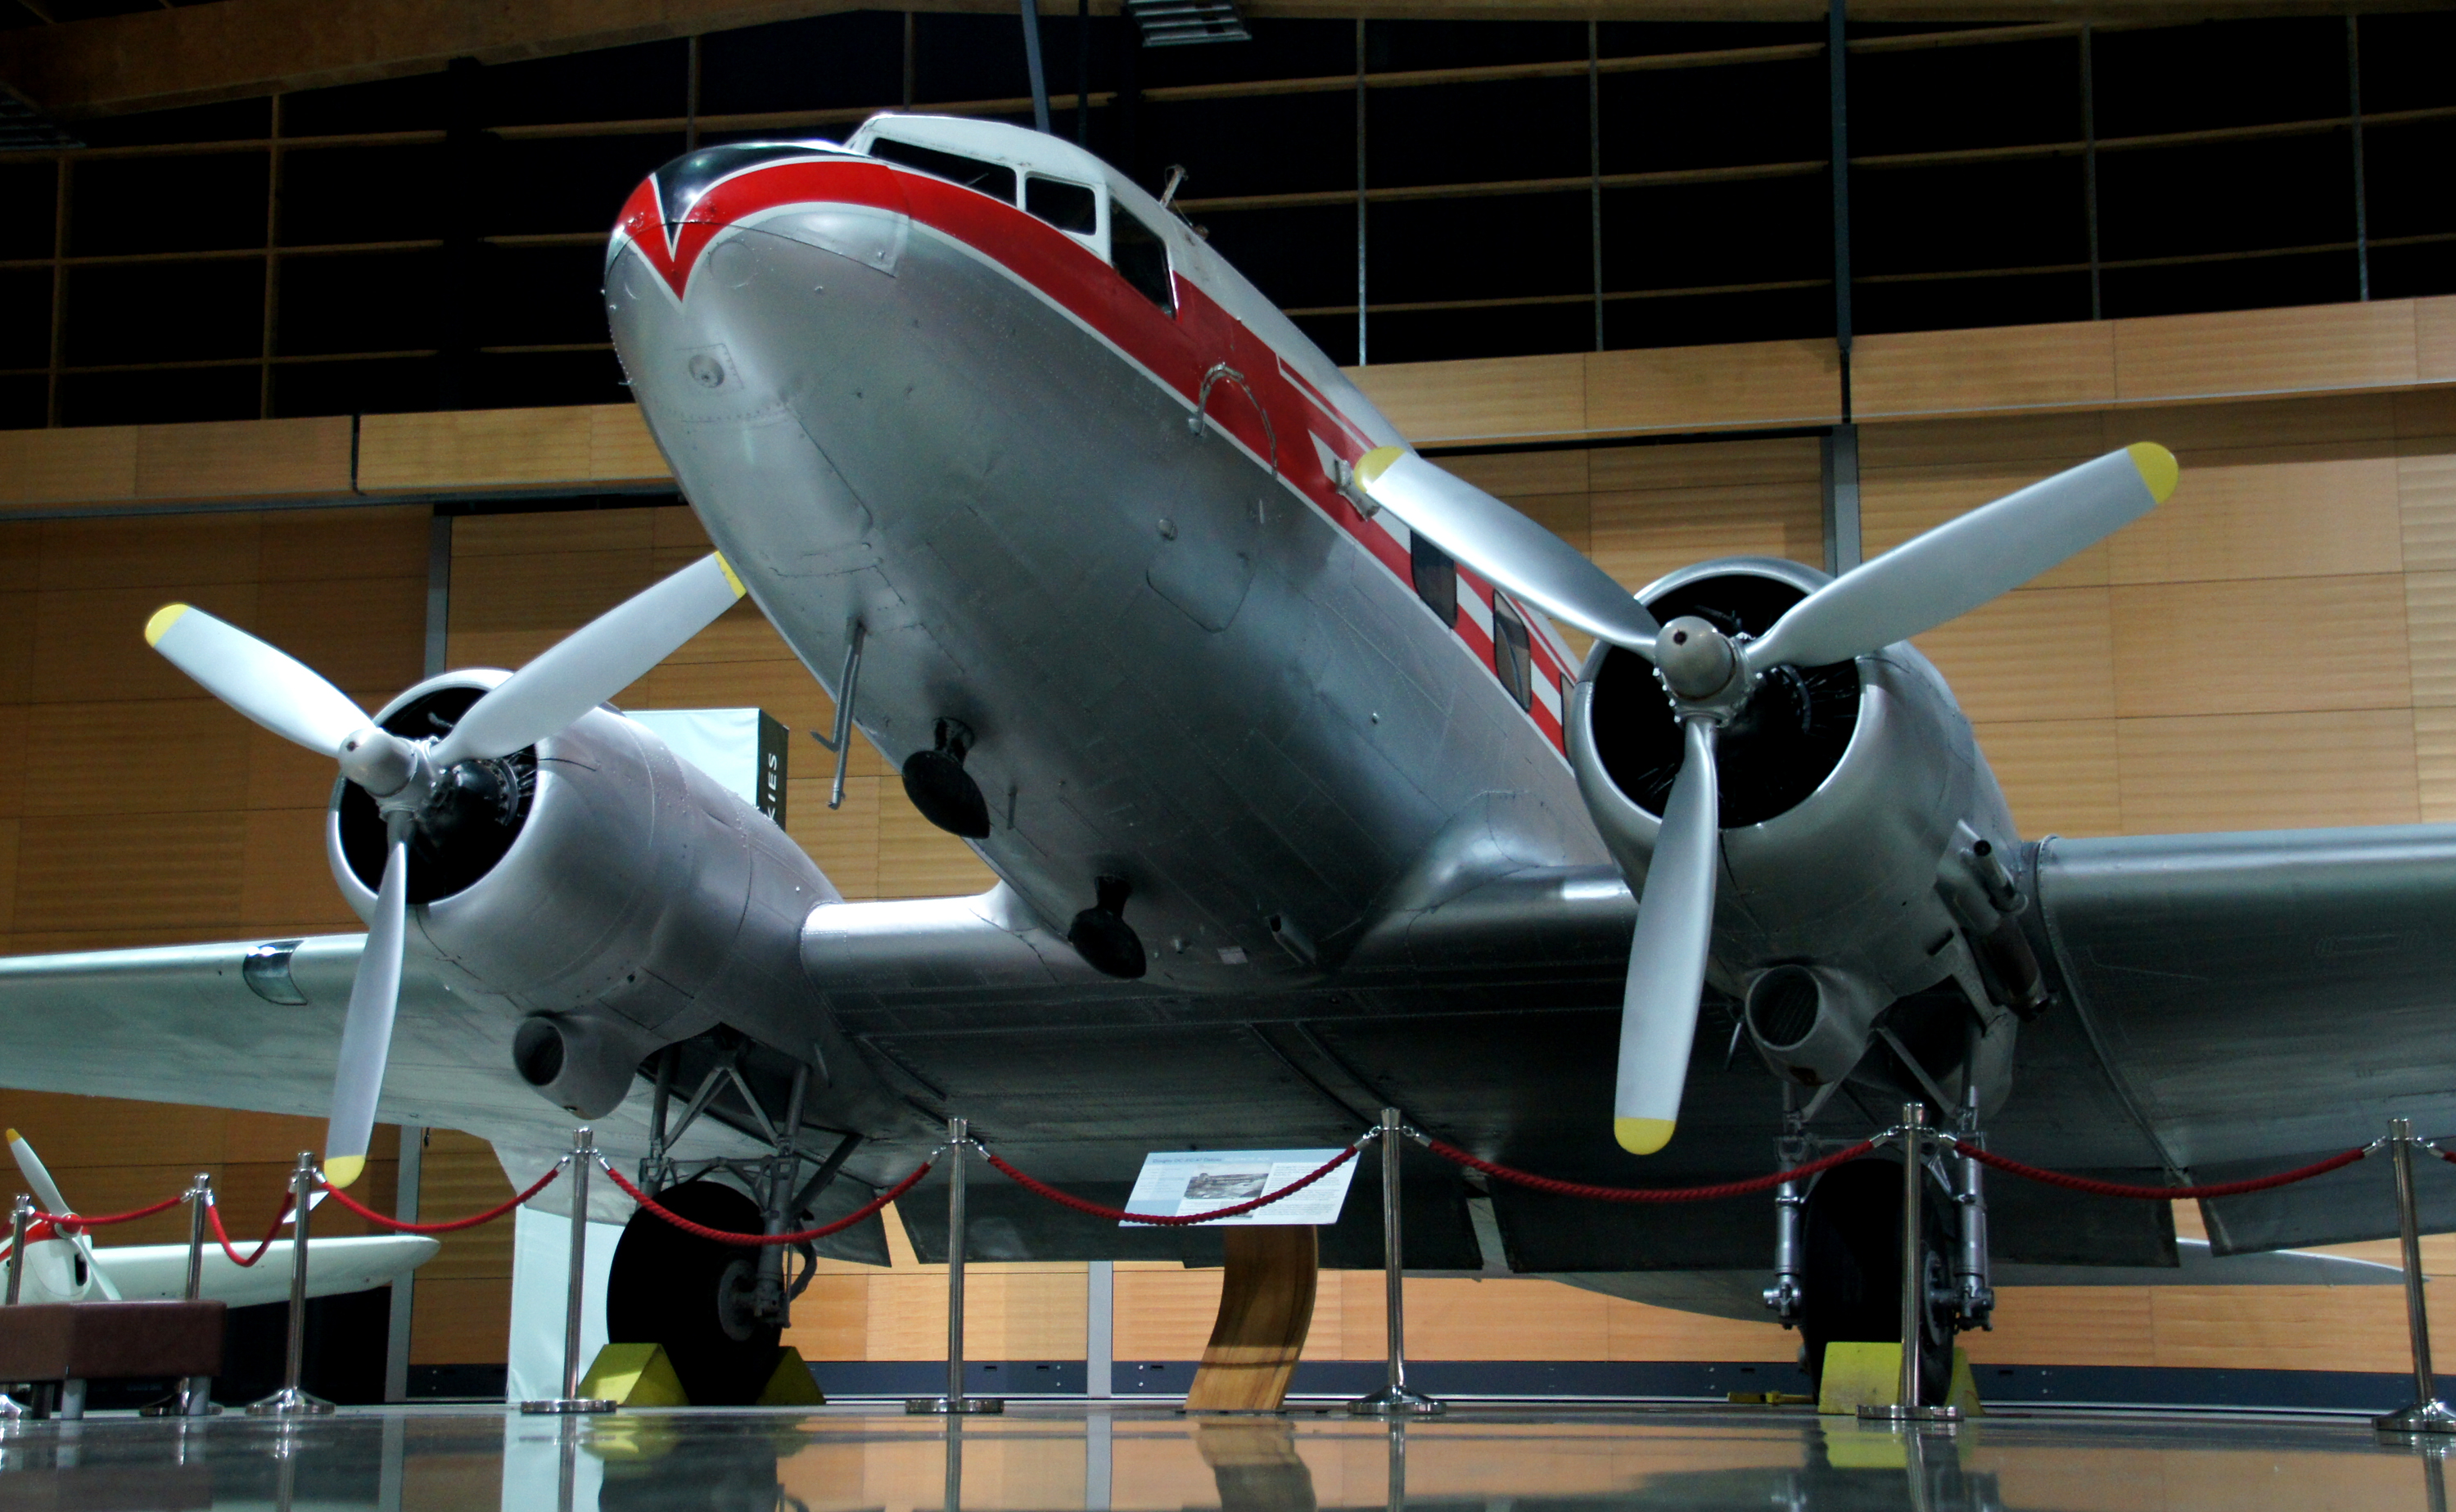 The Douglas DC-3, Aircraft, Aircraft Displays, Airplane, Classic aircraft, HQ Photo